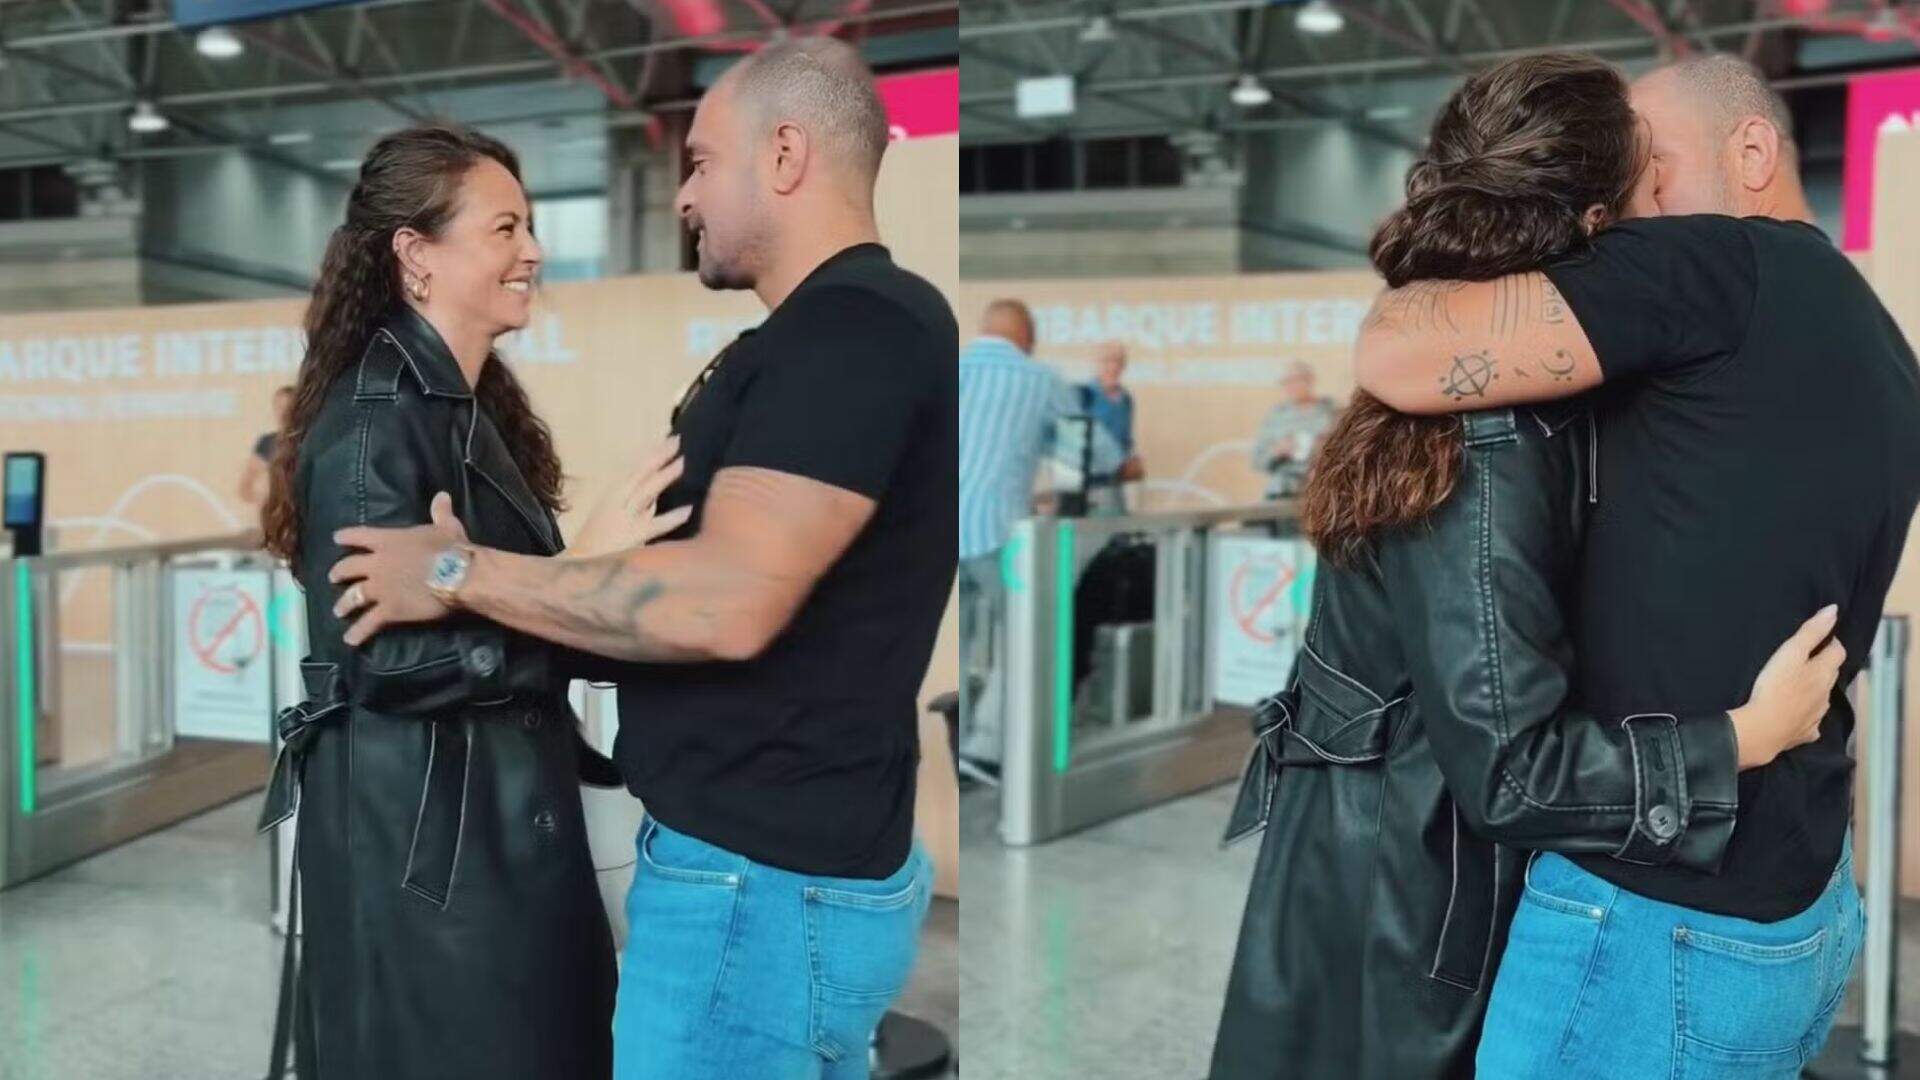 Paolla Oliveira e Diogo Nogueira protagonizam cena de novela durante despedida em aeroporto!